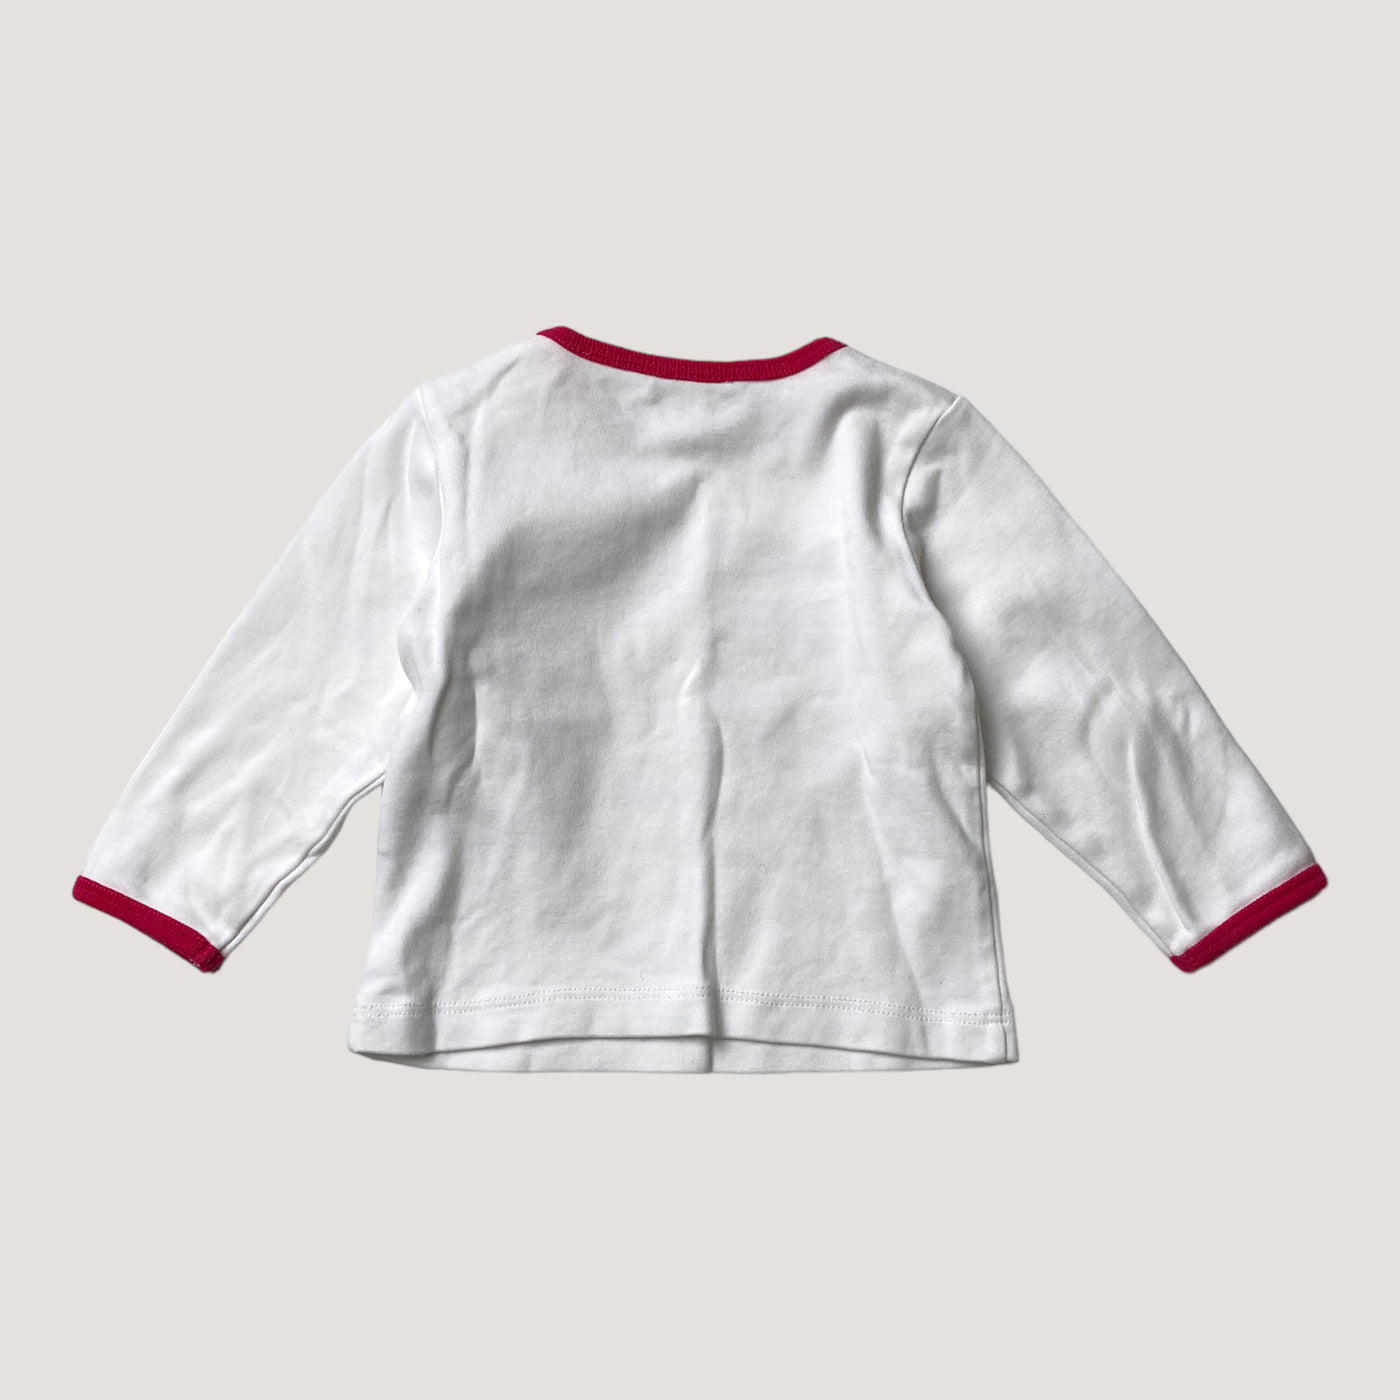 Marimekko tricot shirt, white | 74cm